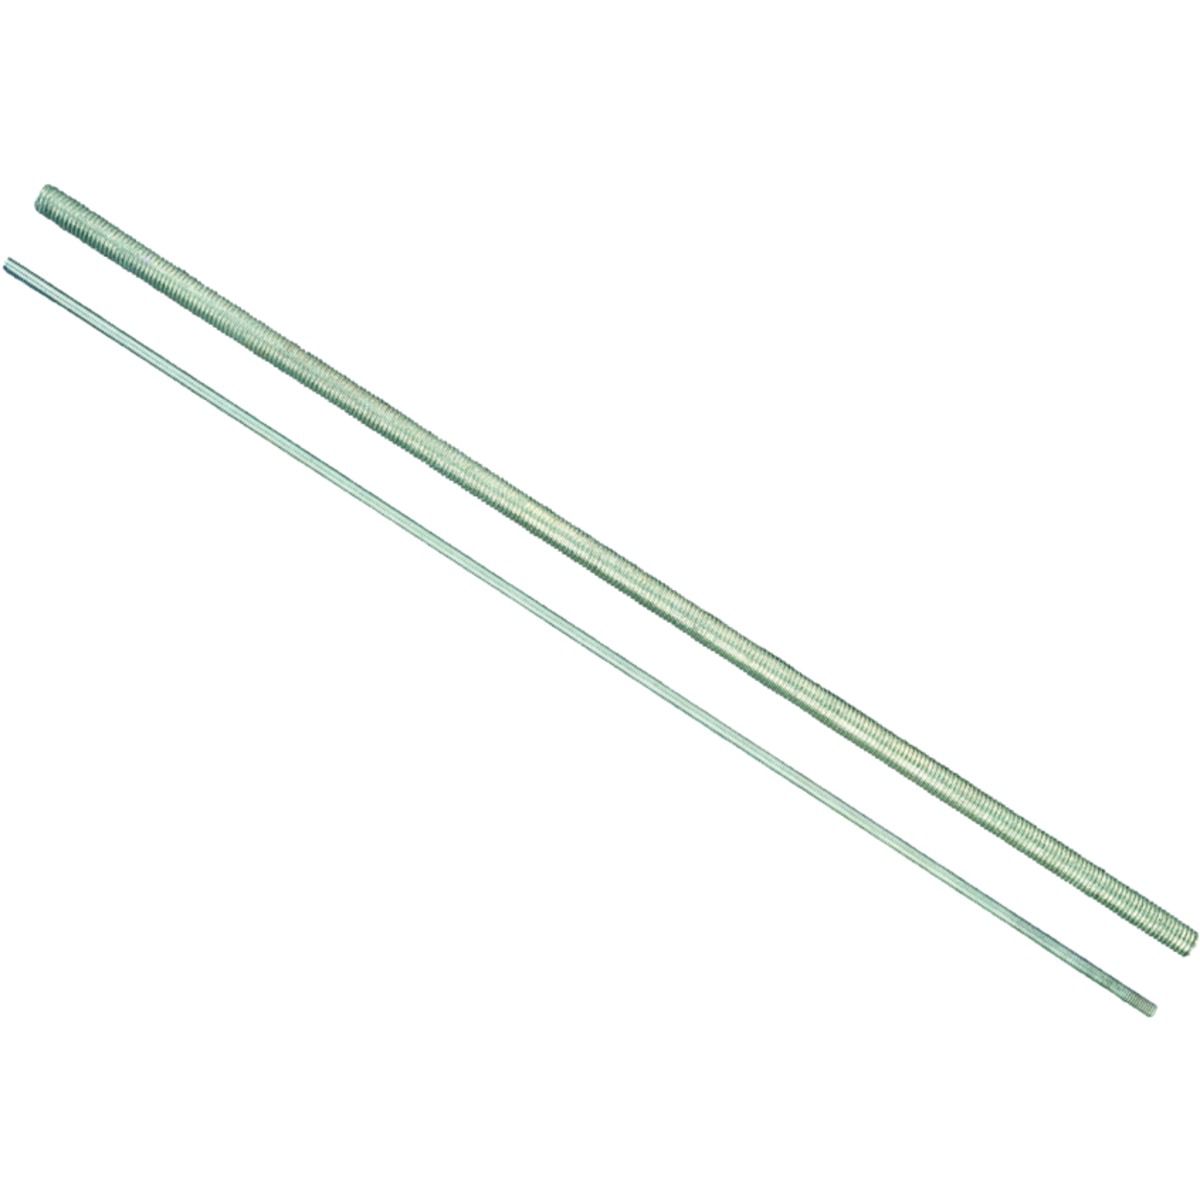 Fischer Principle Threaded Rods - M10 - Pack